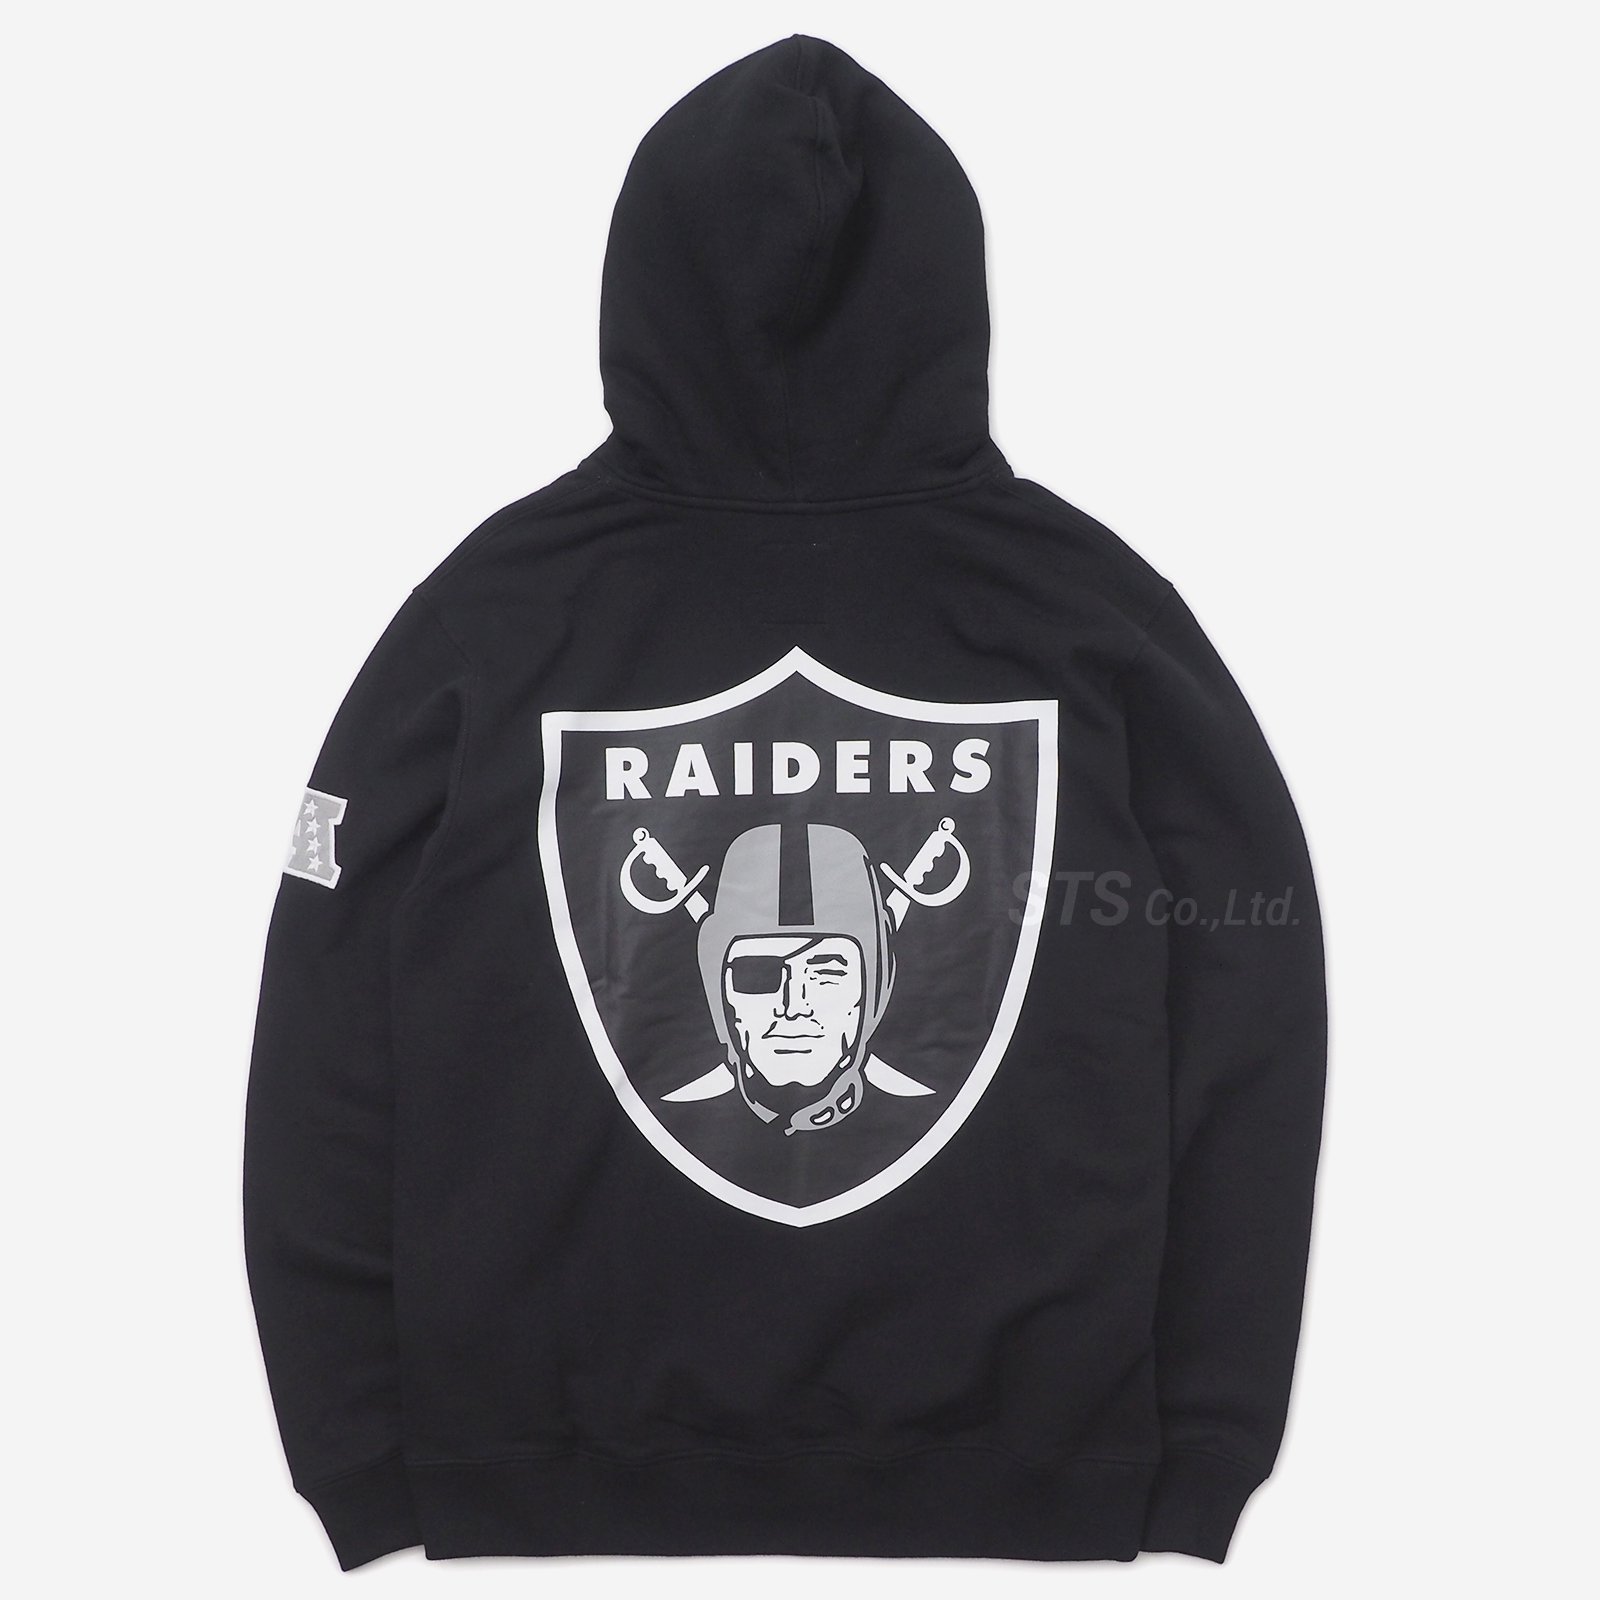 NFL Raiders 47 Hooded Sweatshirt  国内正規品